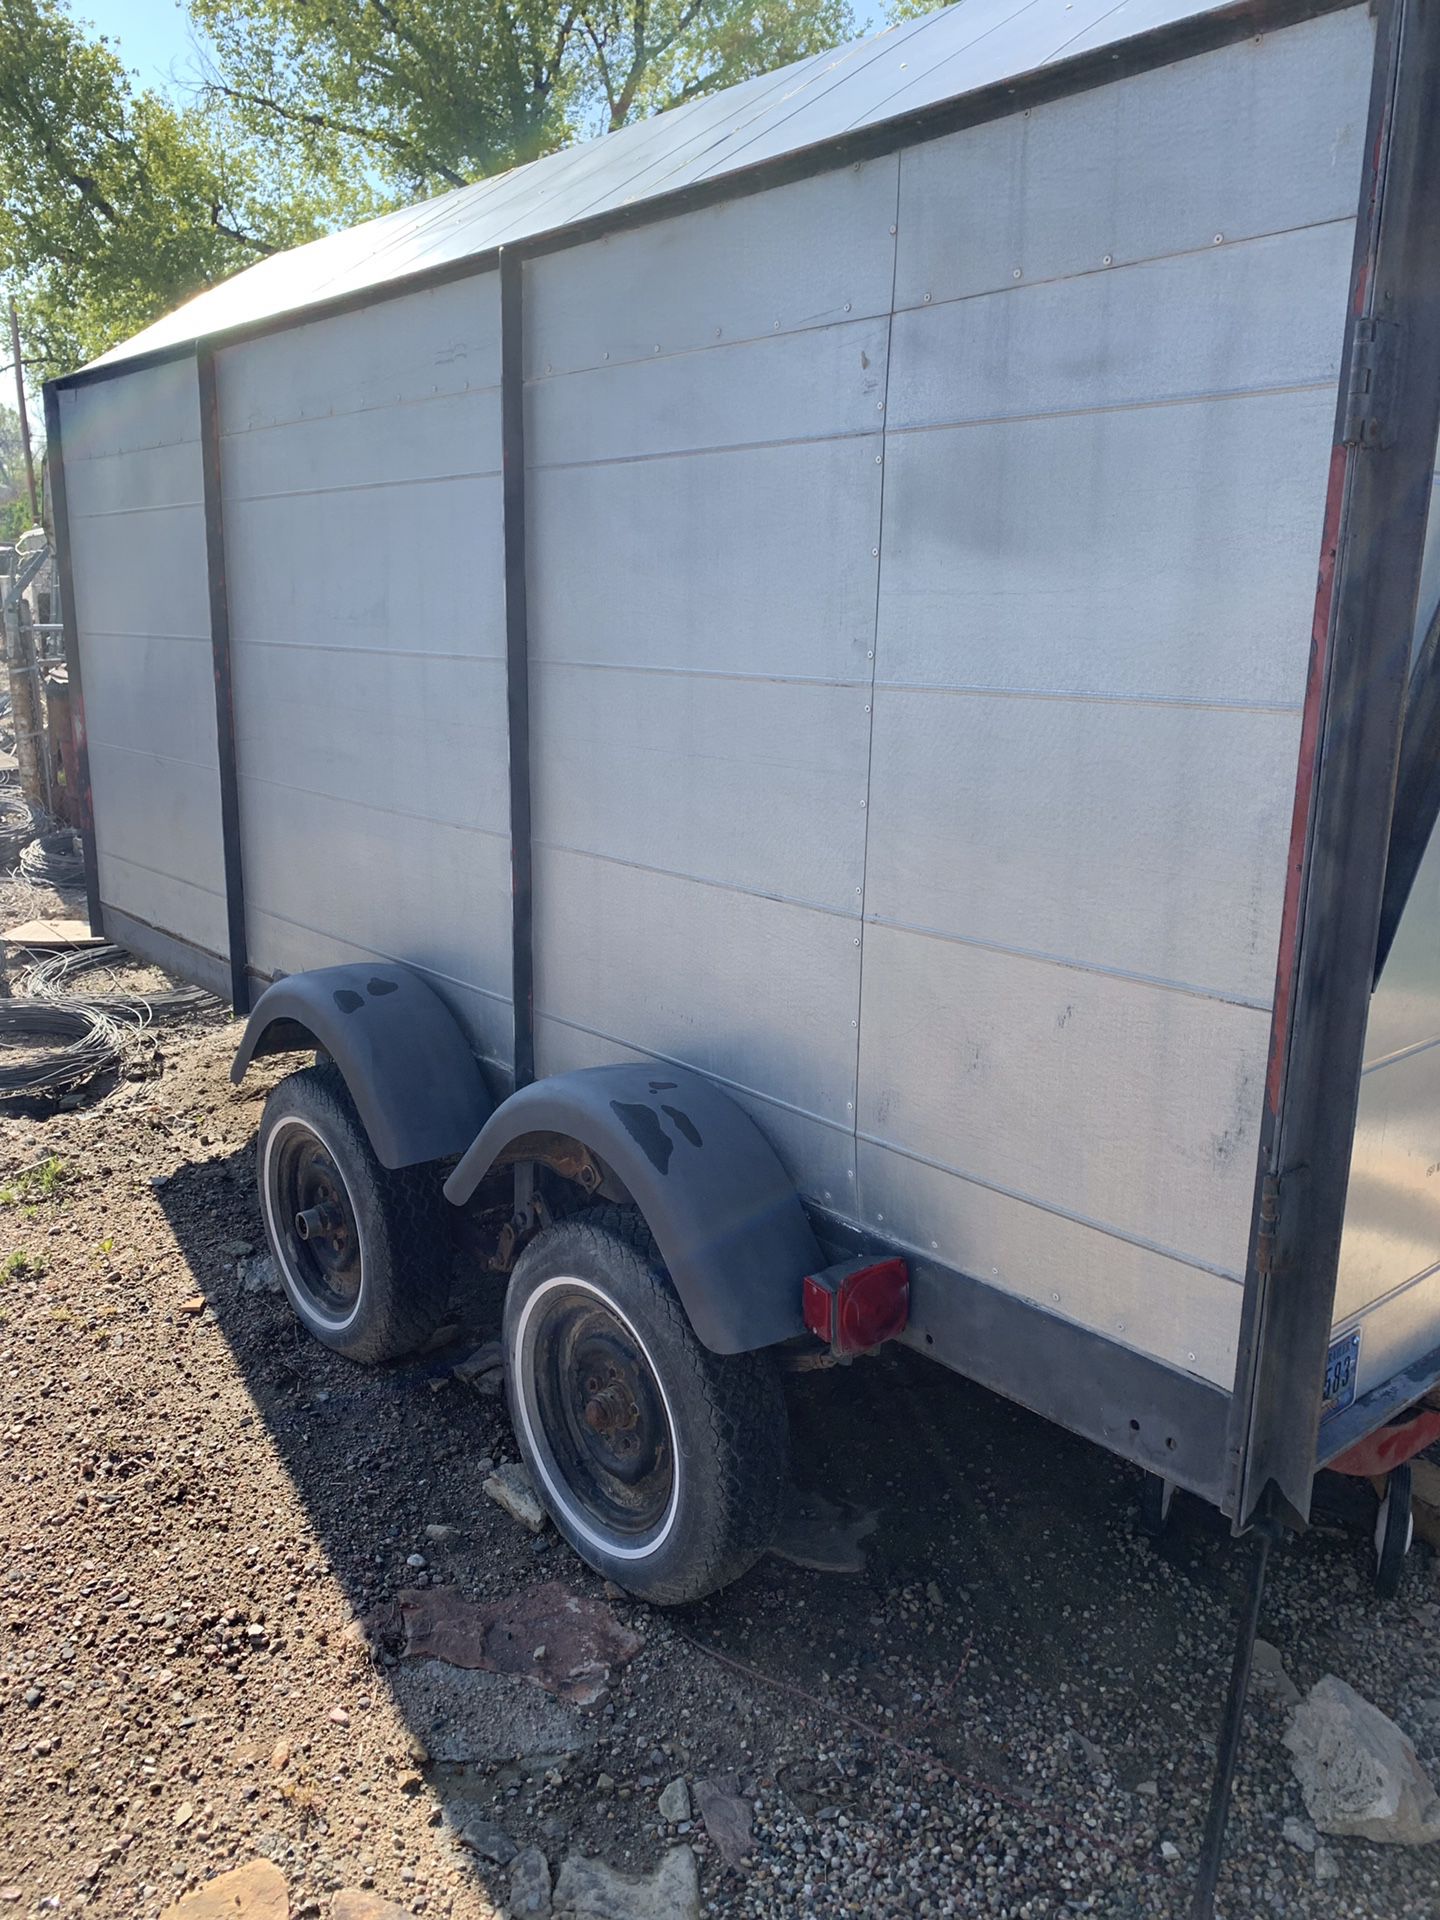 Photo 12ft x 5ft double tandem axle utility trailer. $1500